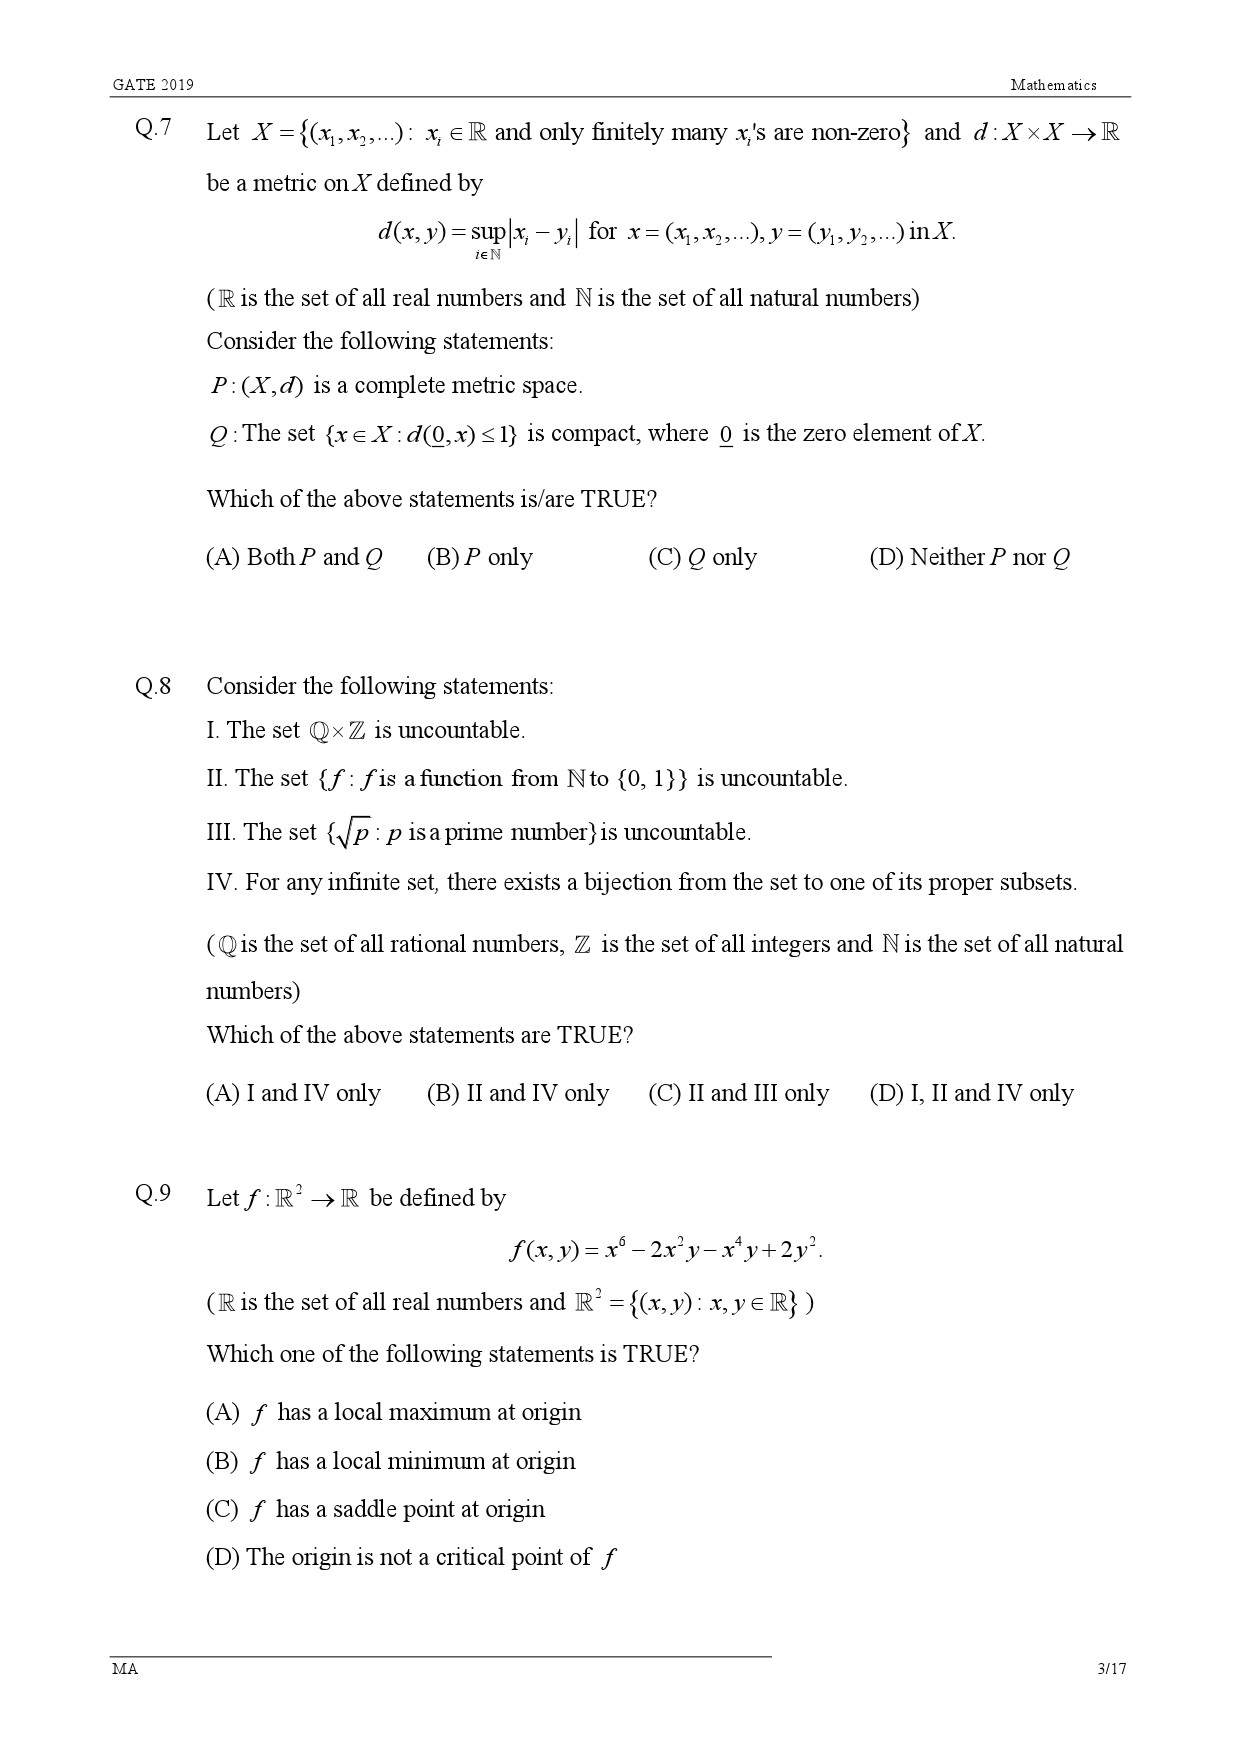 GATE Exam Question Paper 2019 Mathematics 6